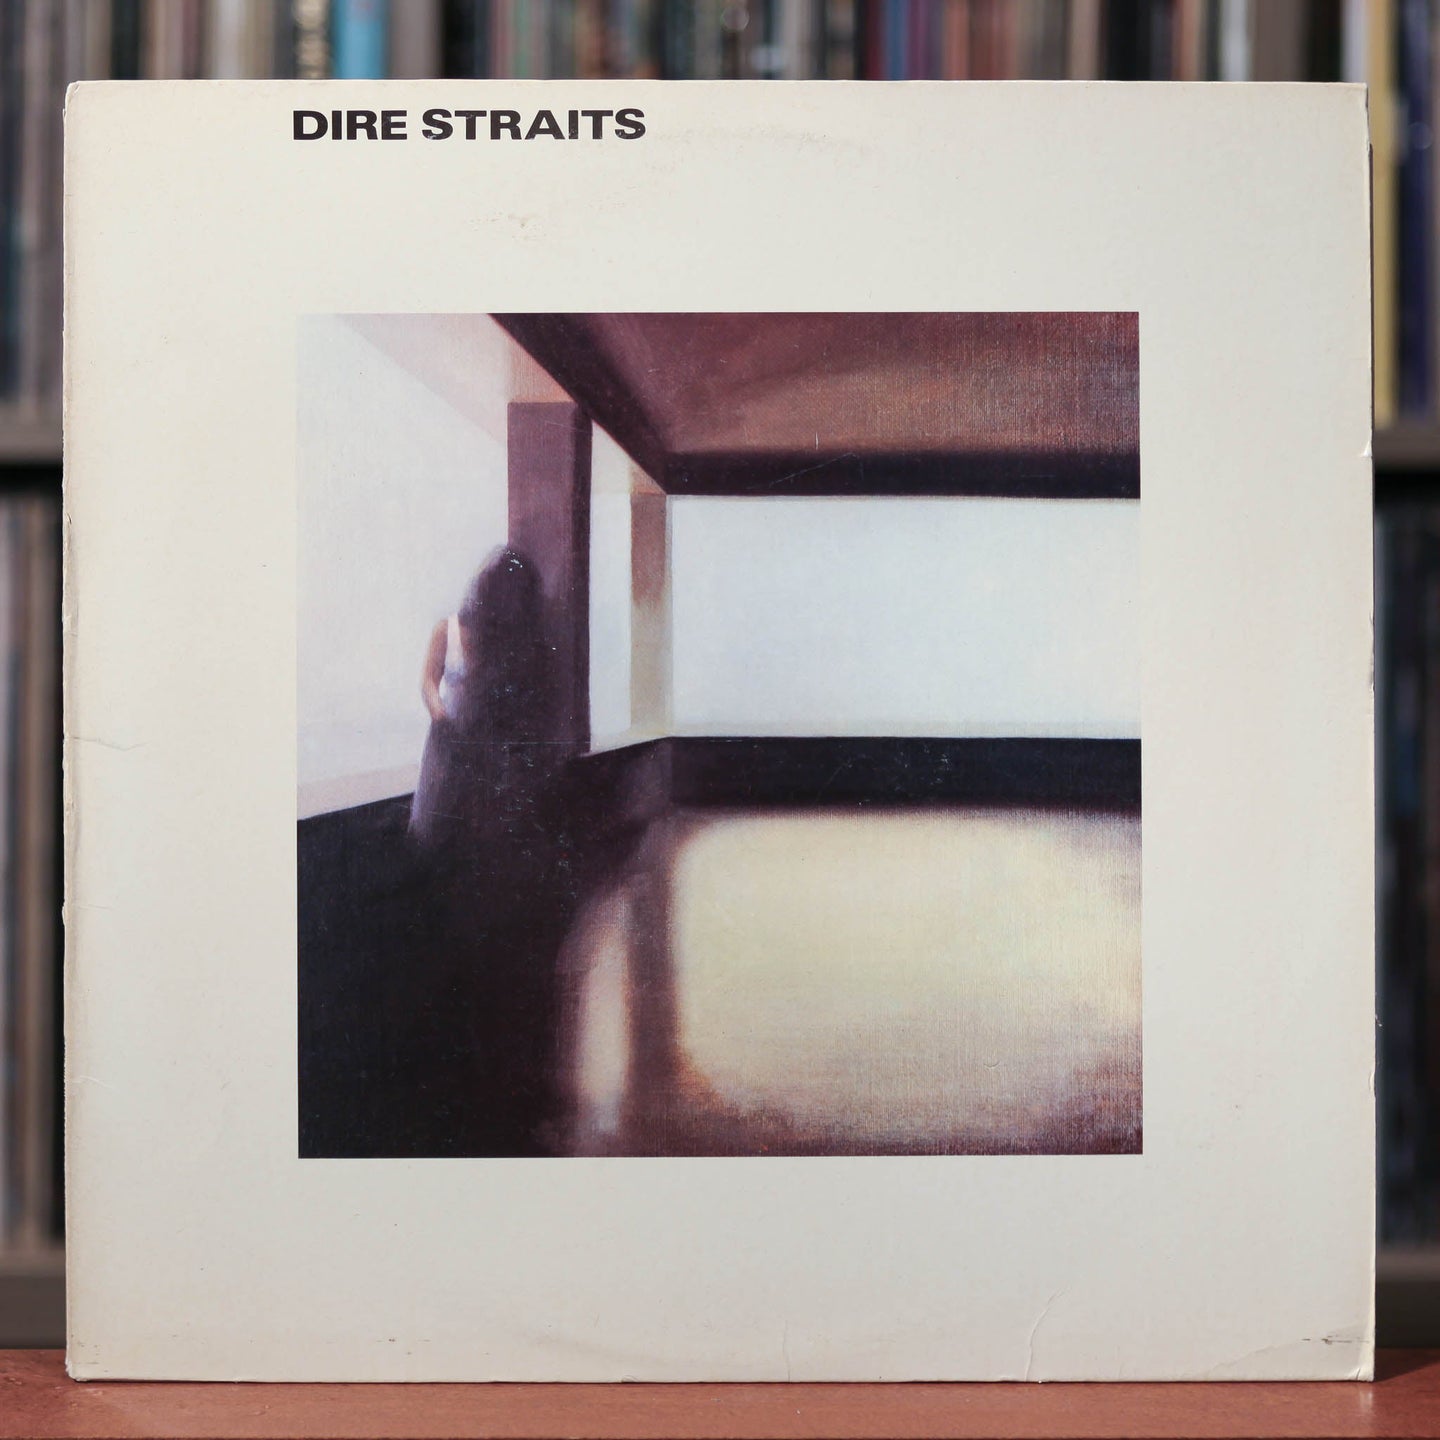 Dire Straits - Dire Straits - 1978 Warner, VG++/VG++